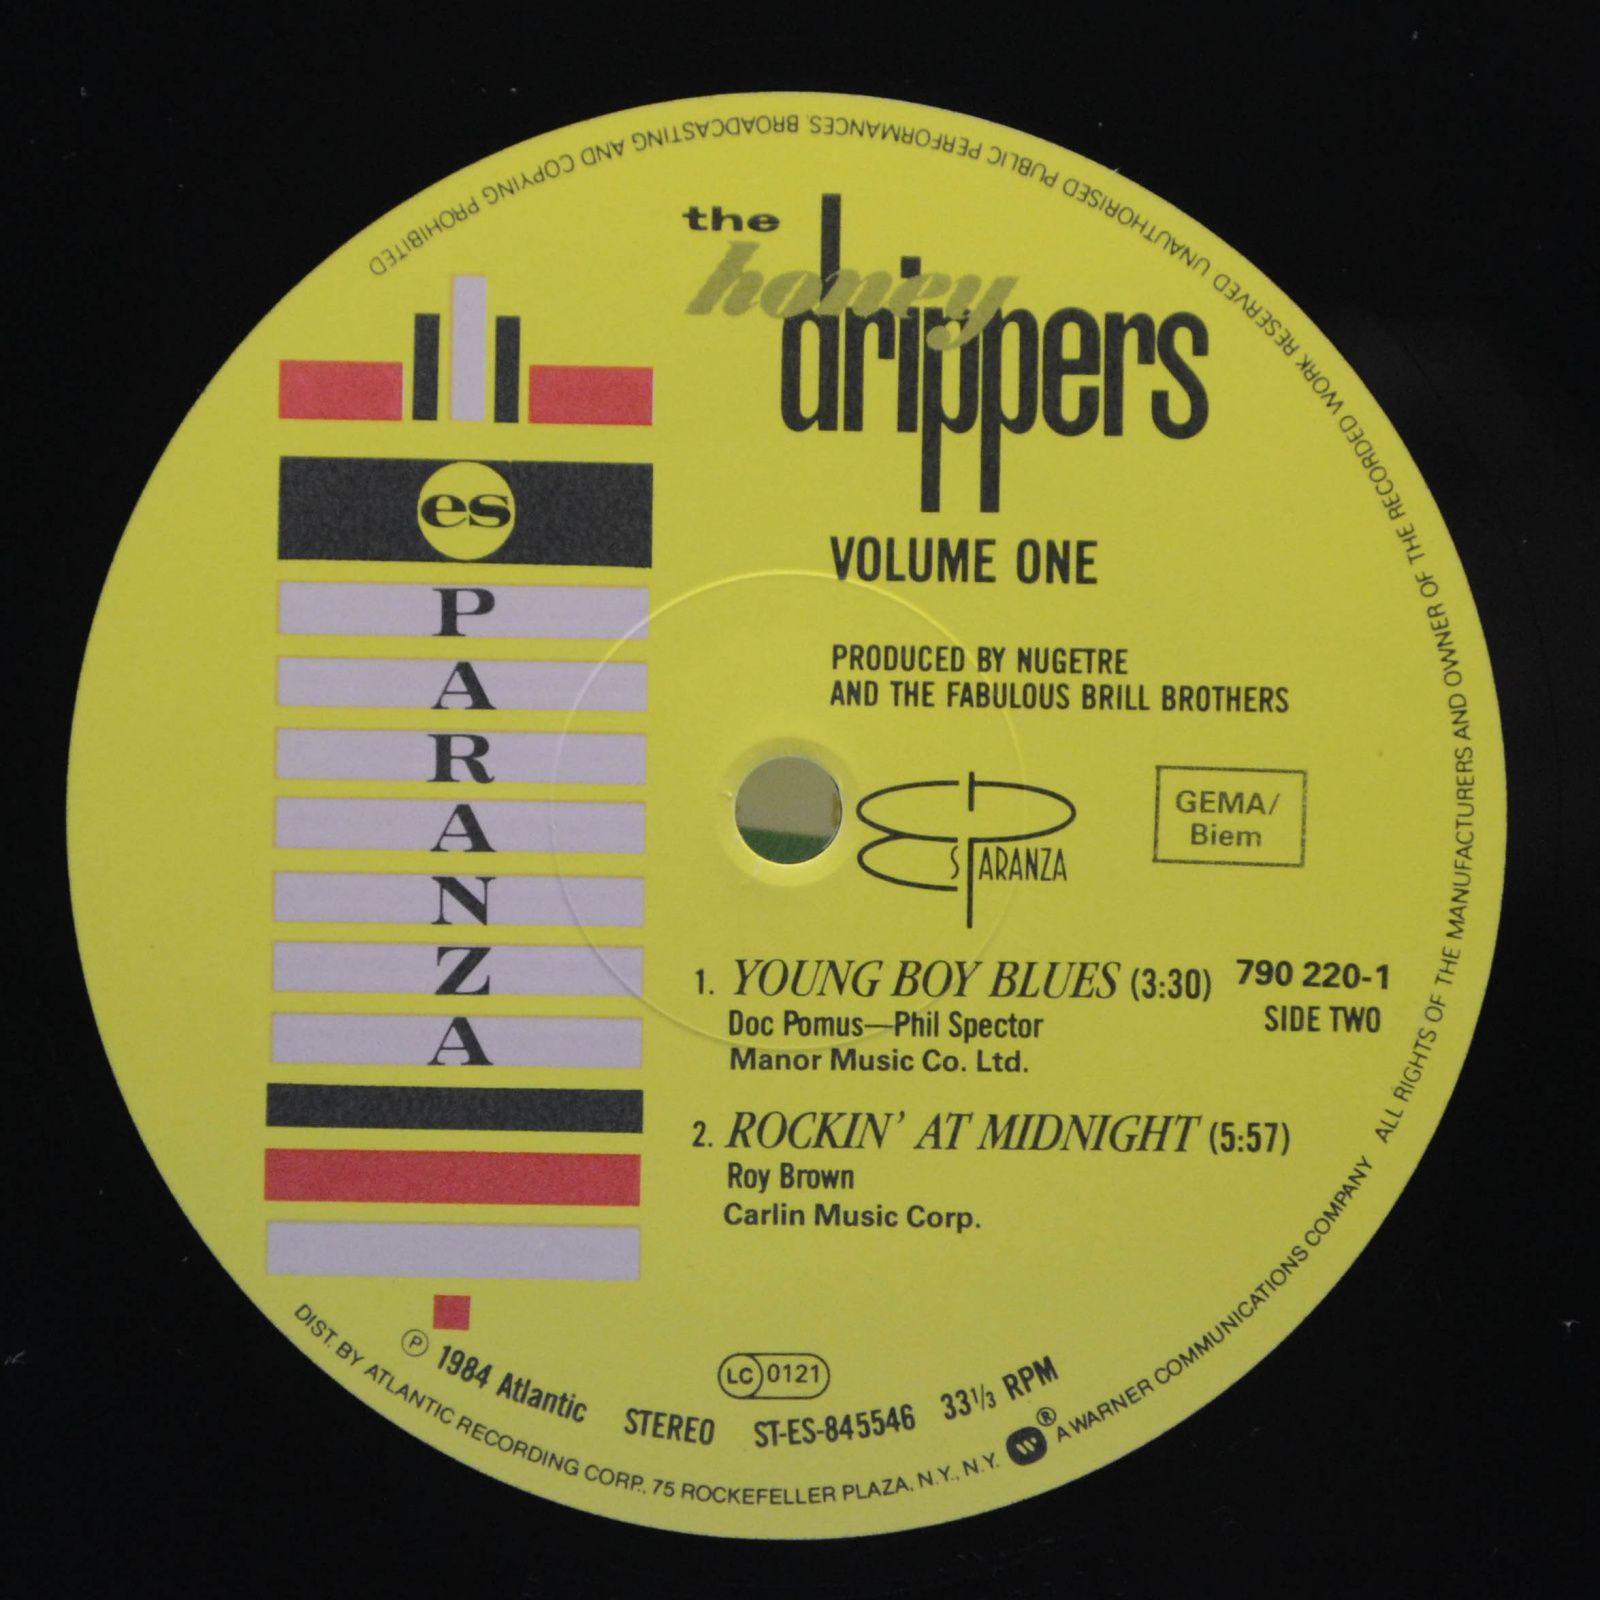 Honeydrippers — Volume One, 1984